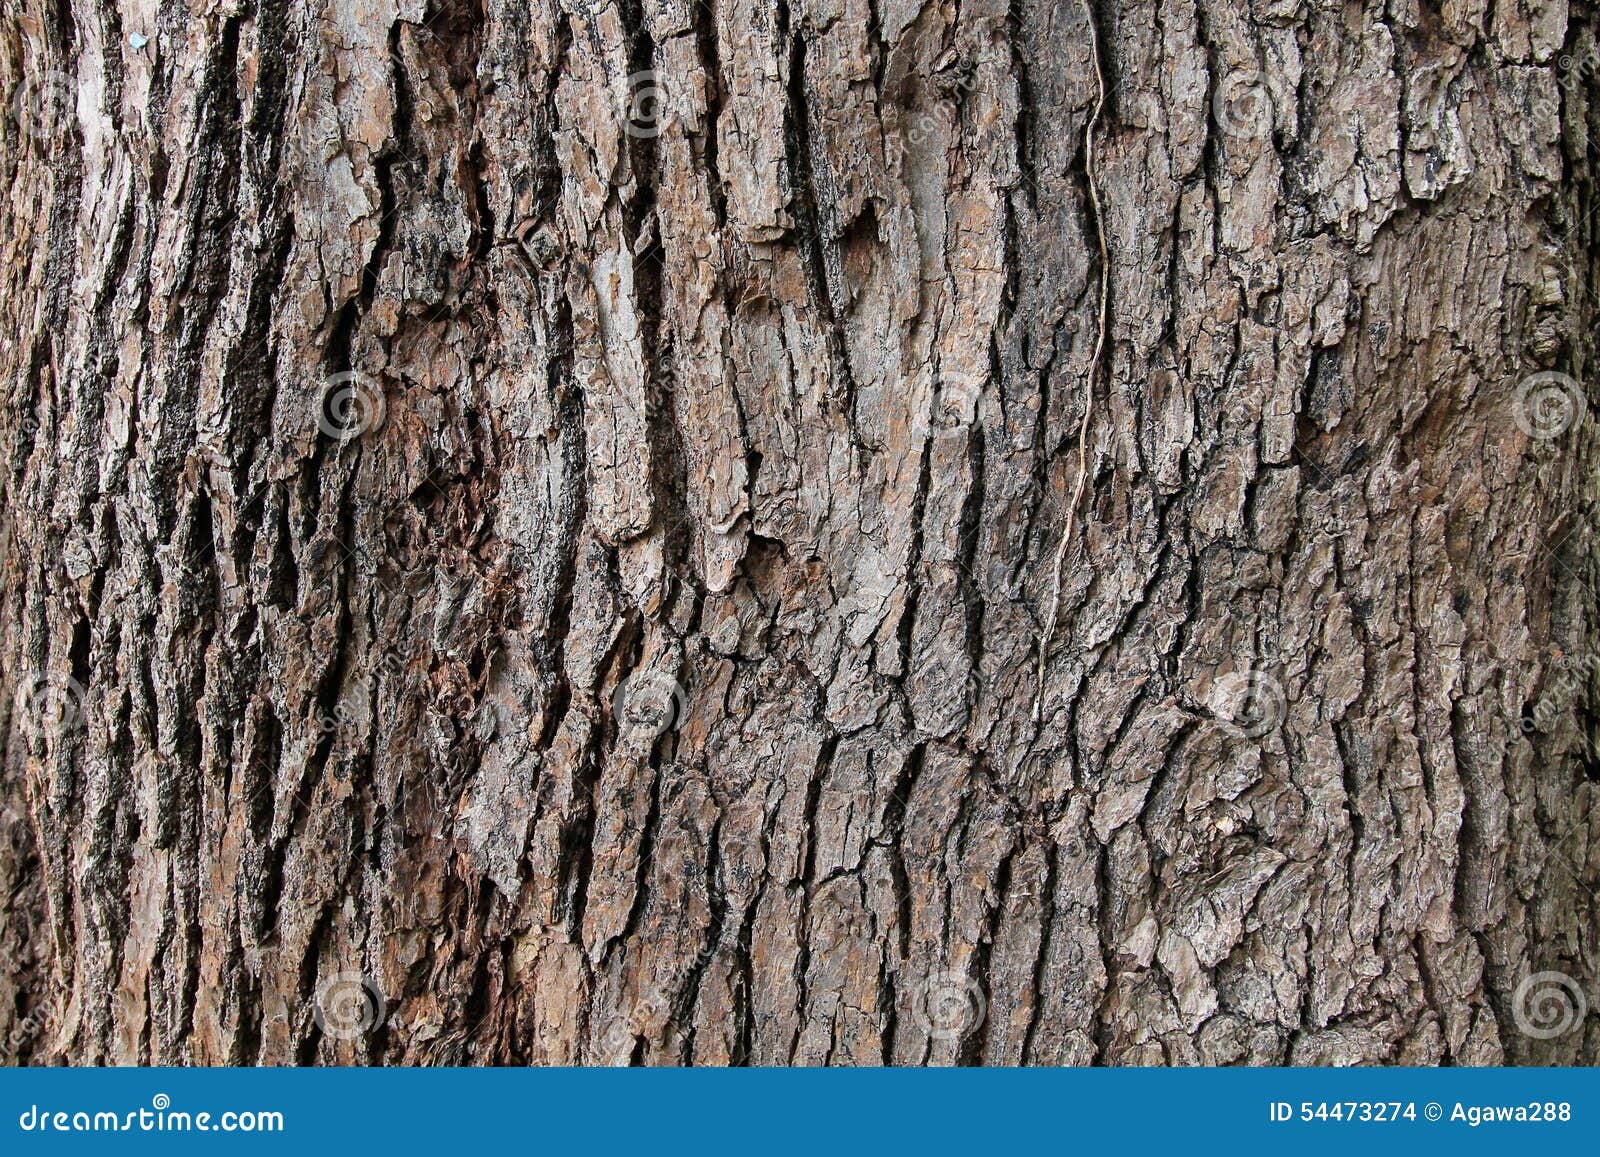 tree bark background texture.